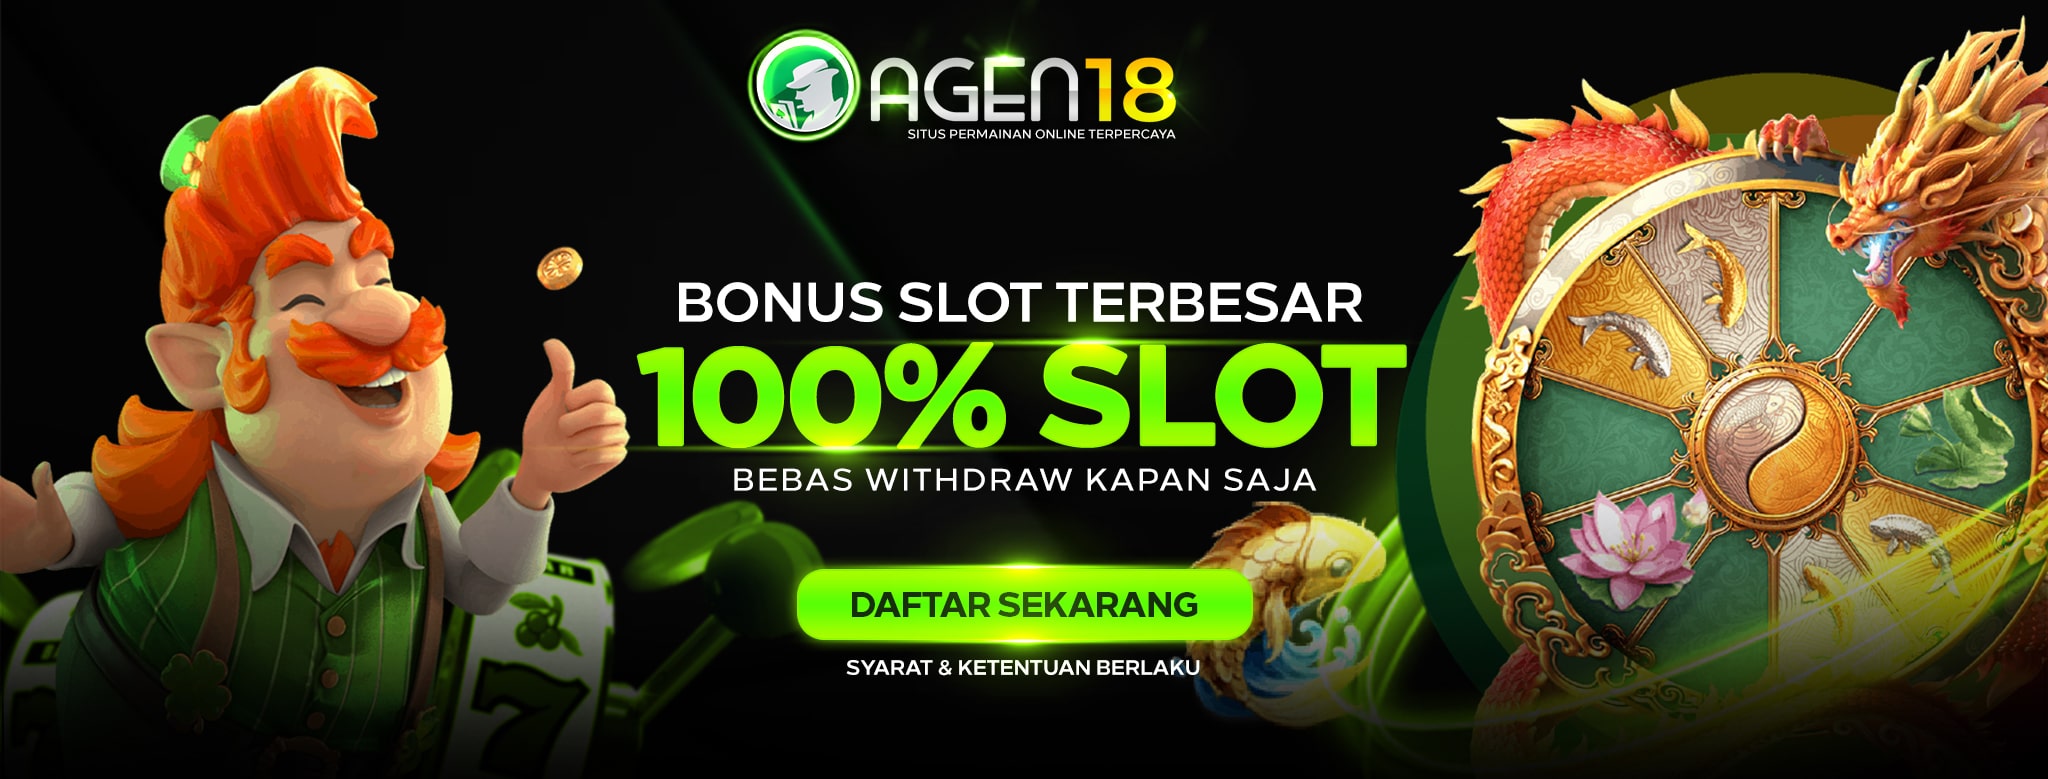 Situs Permainan Online Slot Indonesia - Agen18 Online Slot Resmi